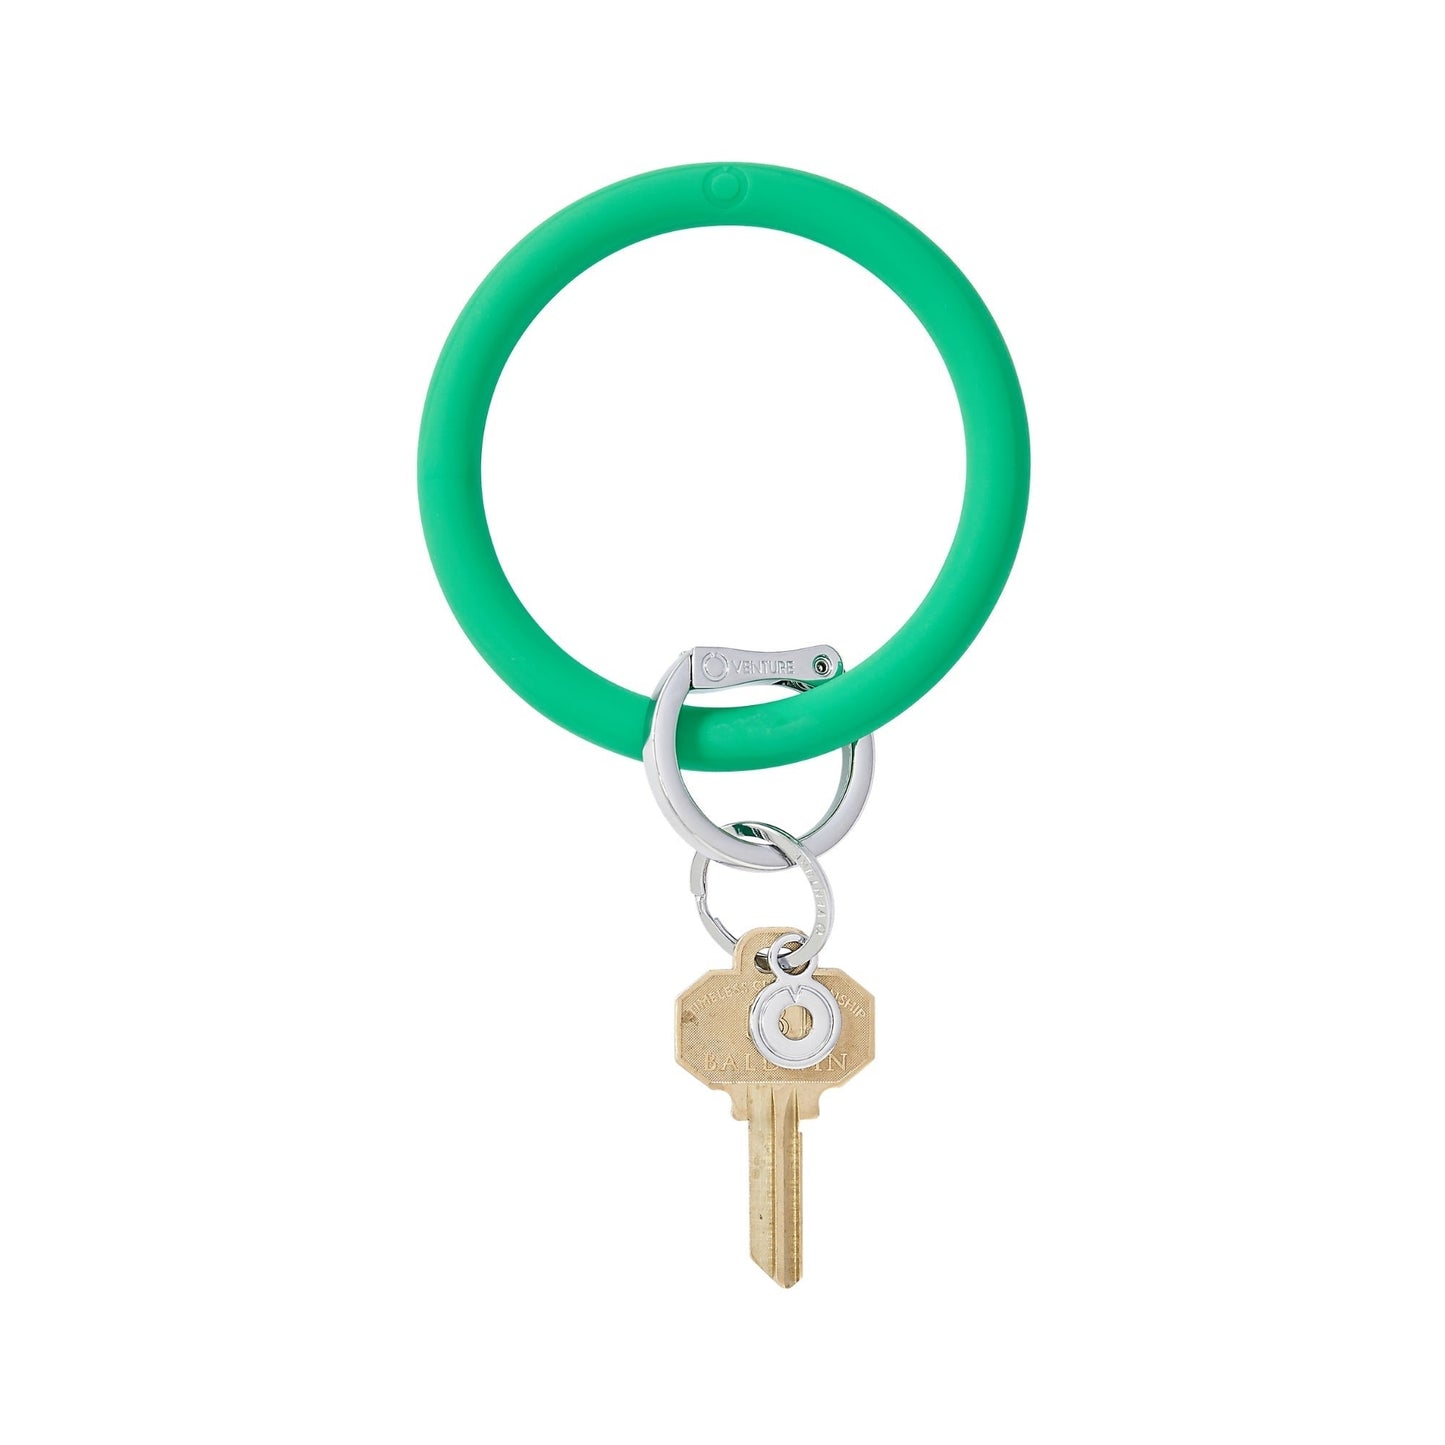 Shamrock green silicone big o key ring with silver locking clasp